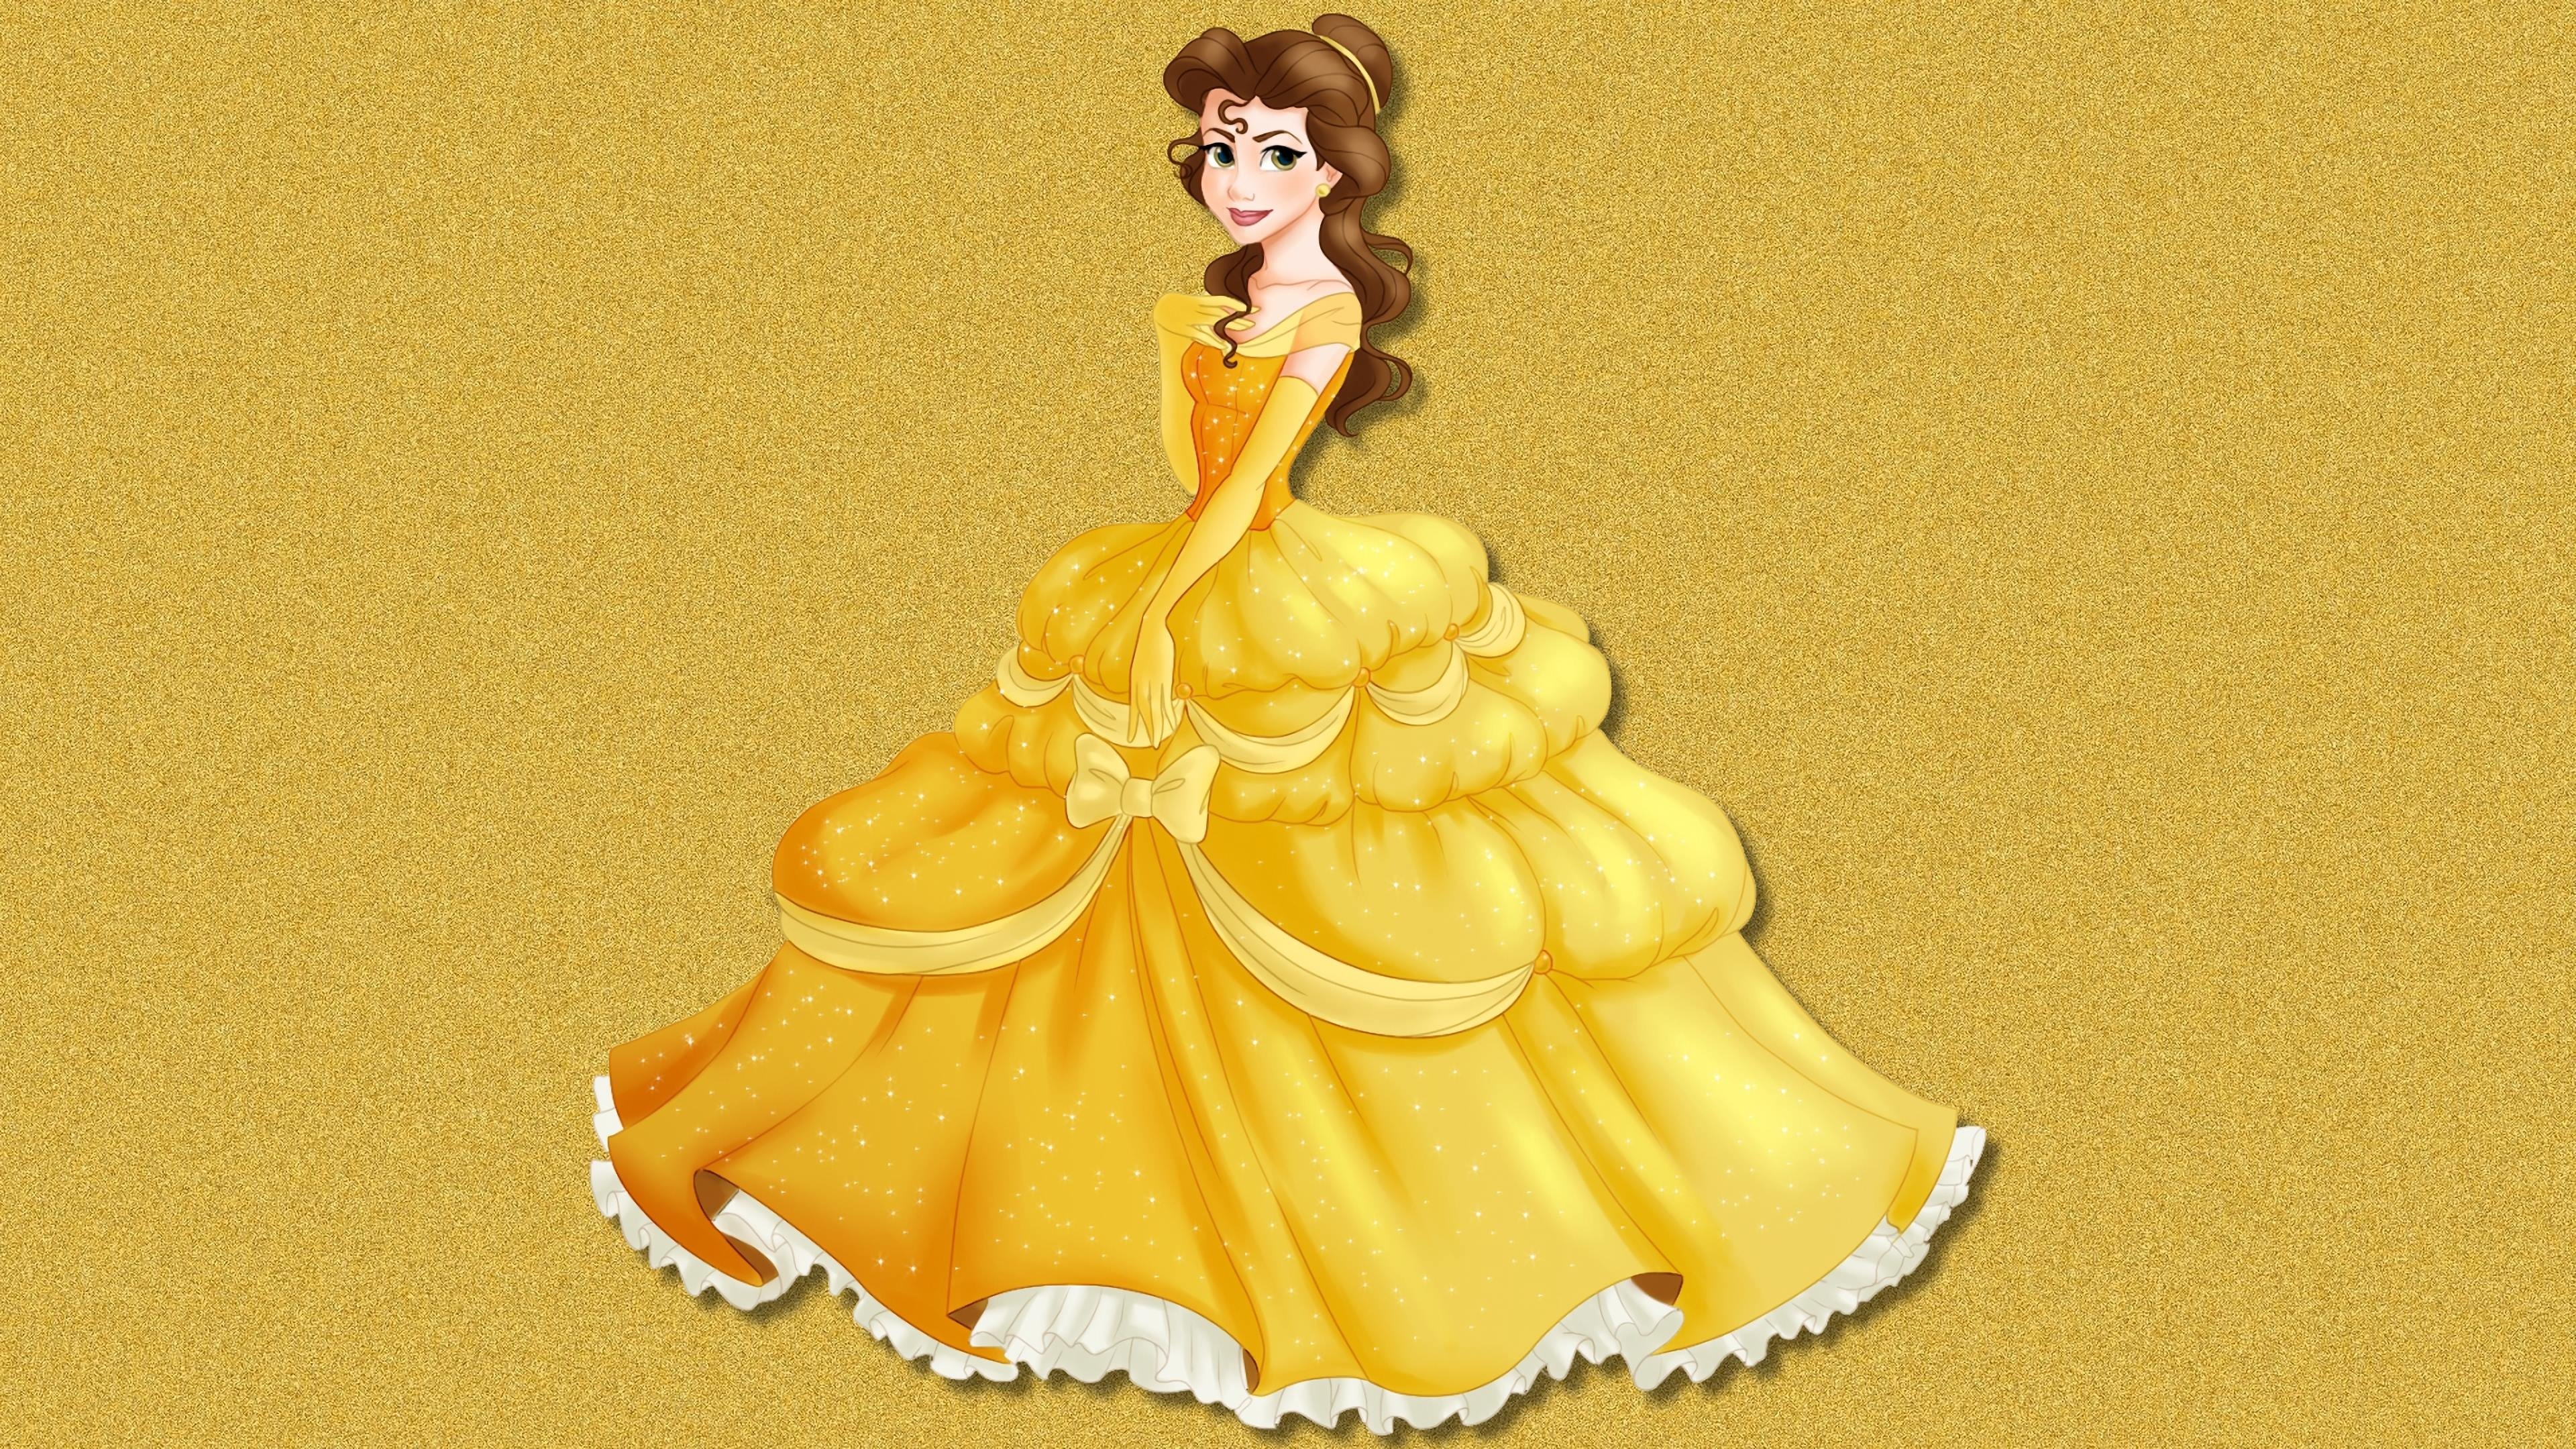 Belle (Disney) Wallpapers (38+ images inside)